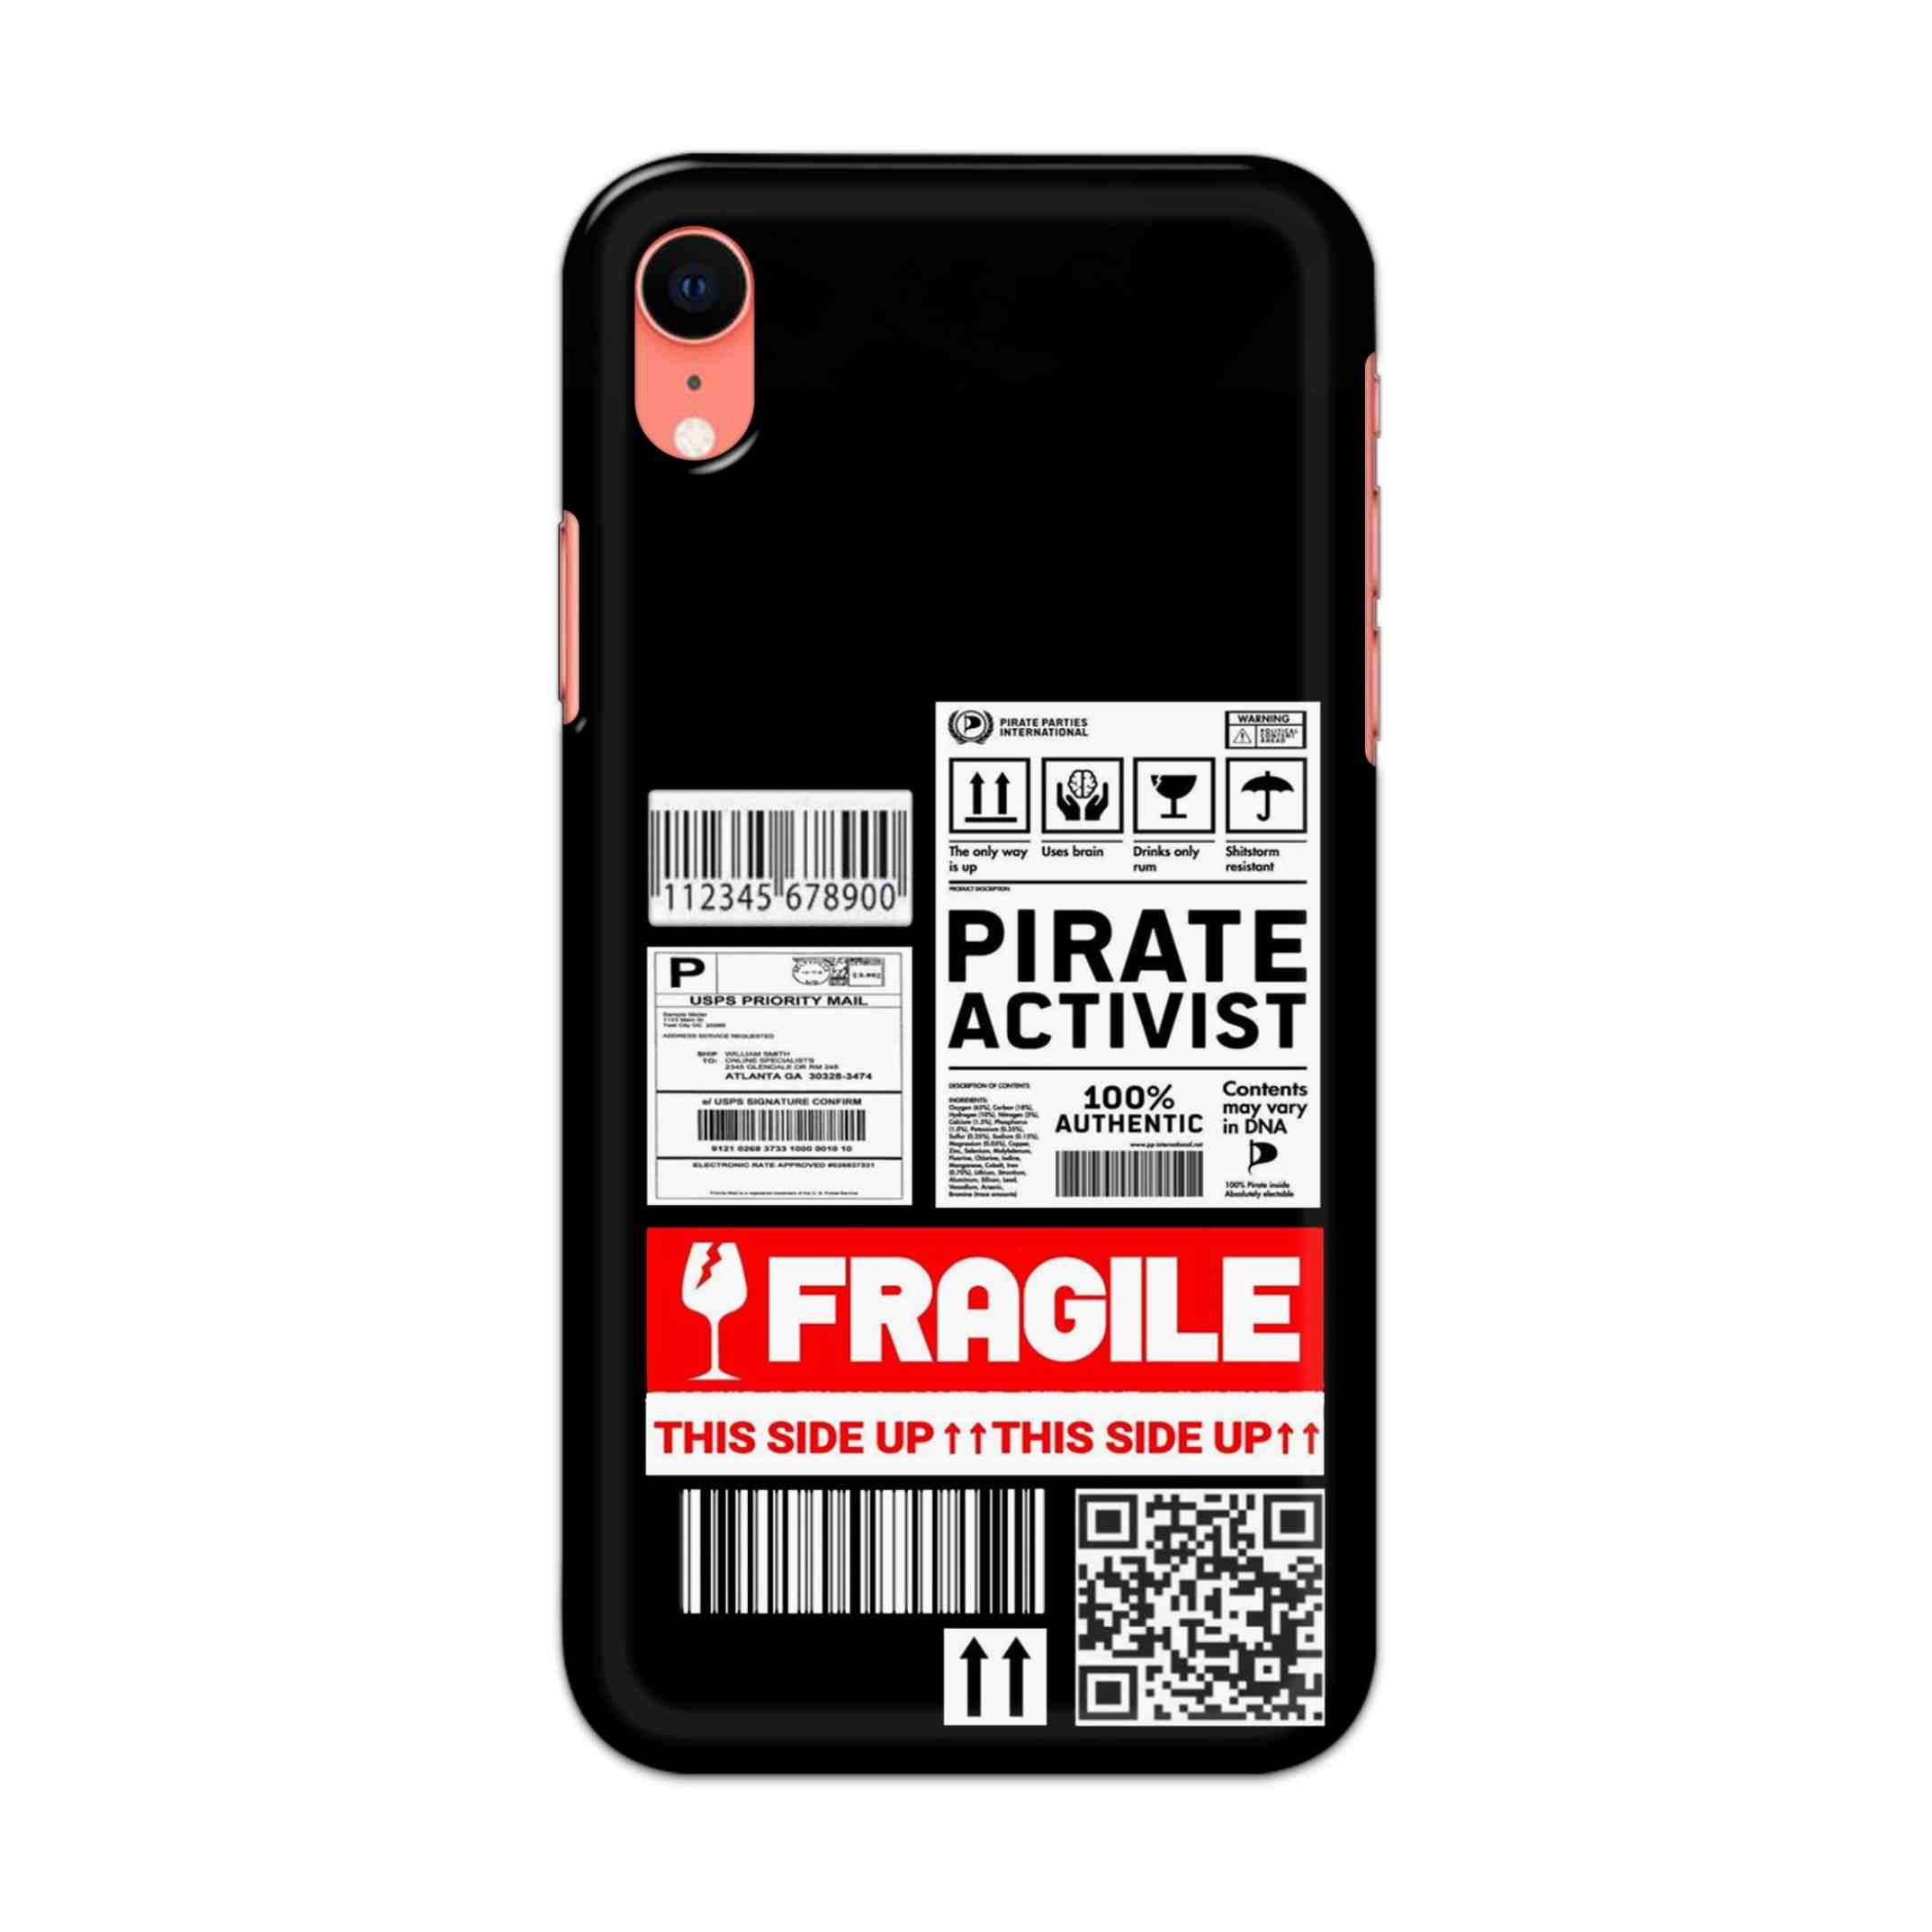 Buy Fragile Hard Back Mobile Phone Case/Cover For iPhone XR Online